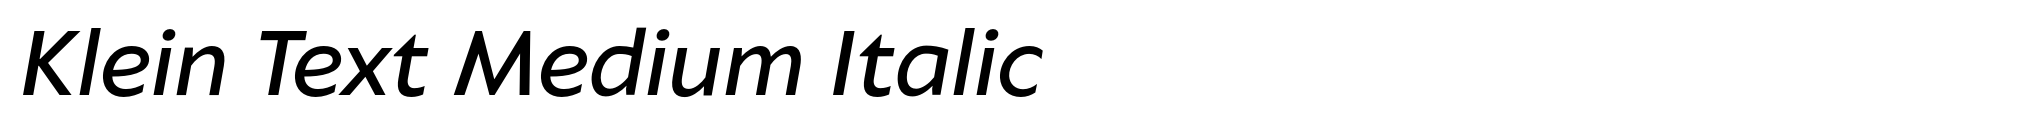 Klein Text Medium Italic image